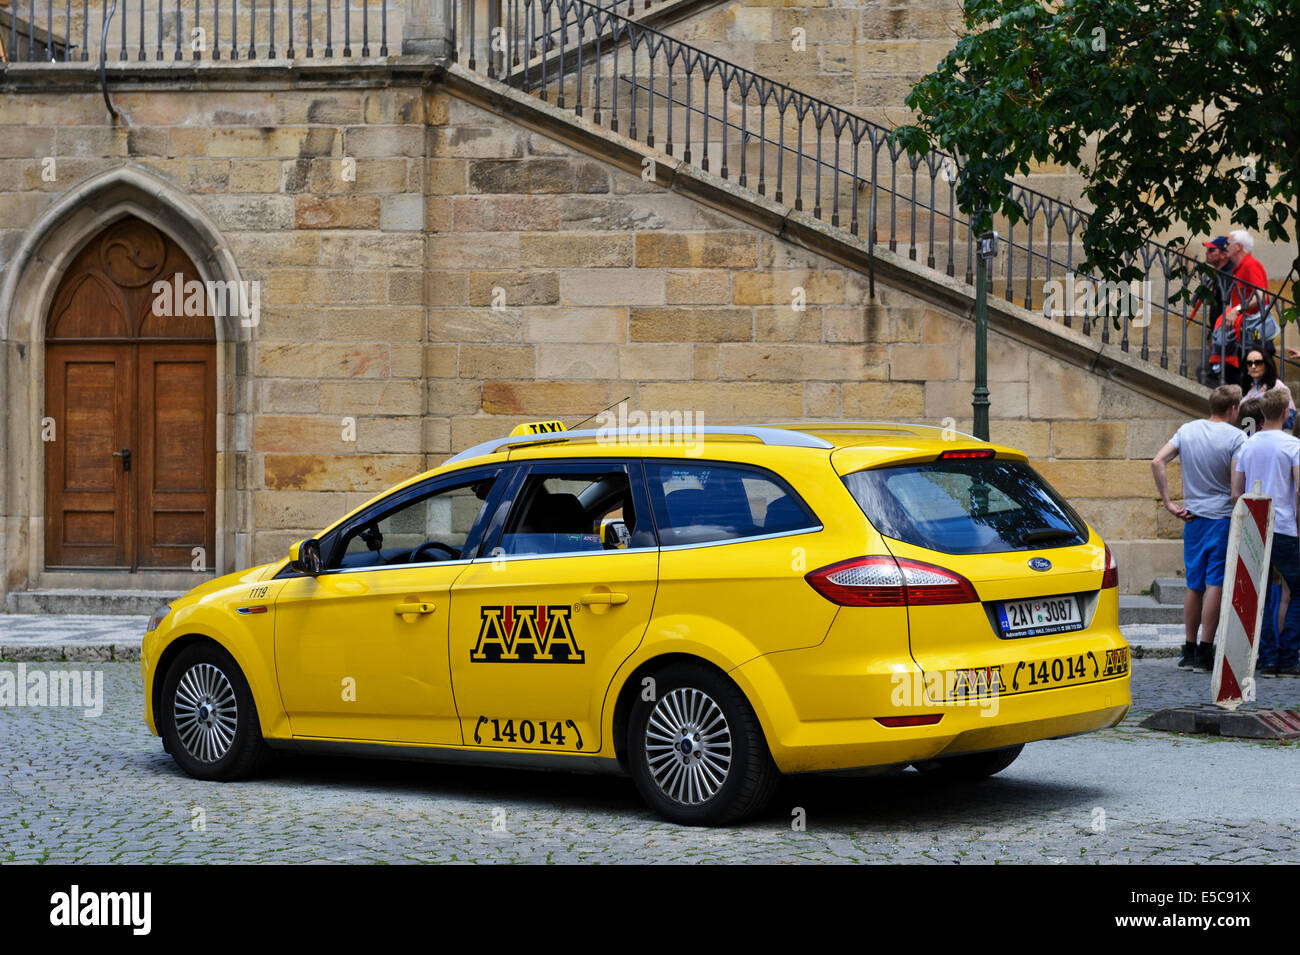 Taxi in prag -Fotos und -Bildmaterial in hoher Auflösung – Alamy